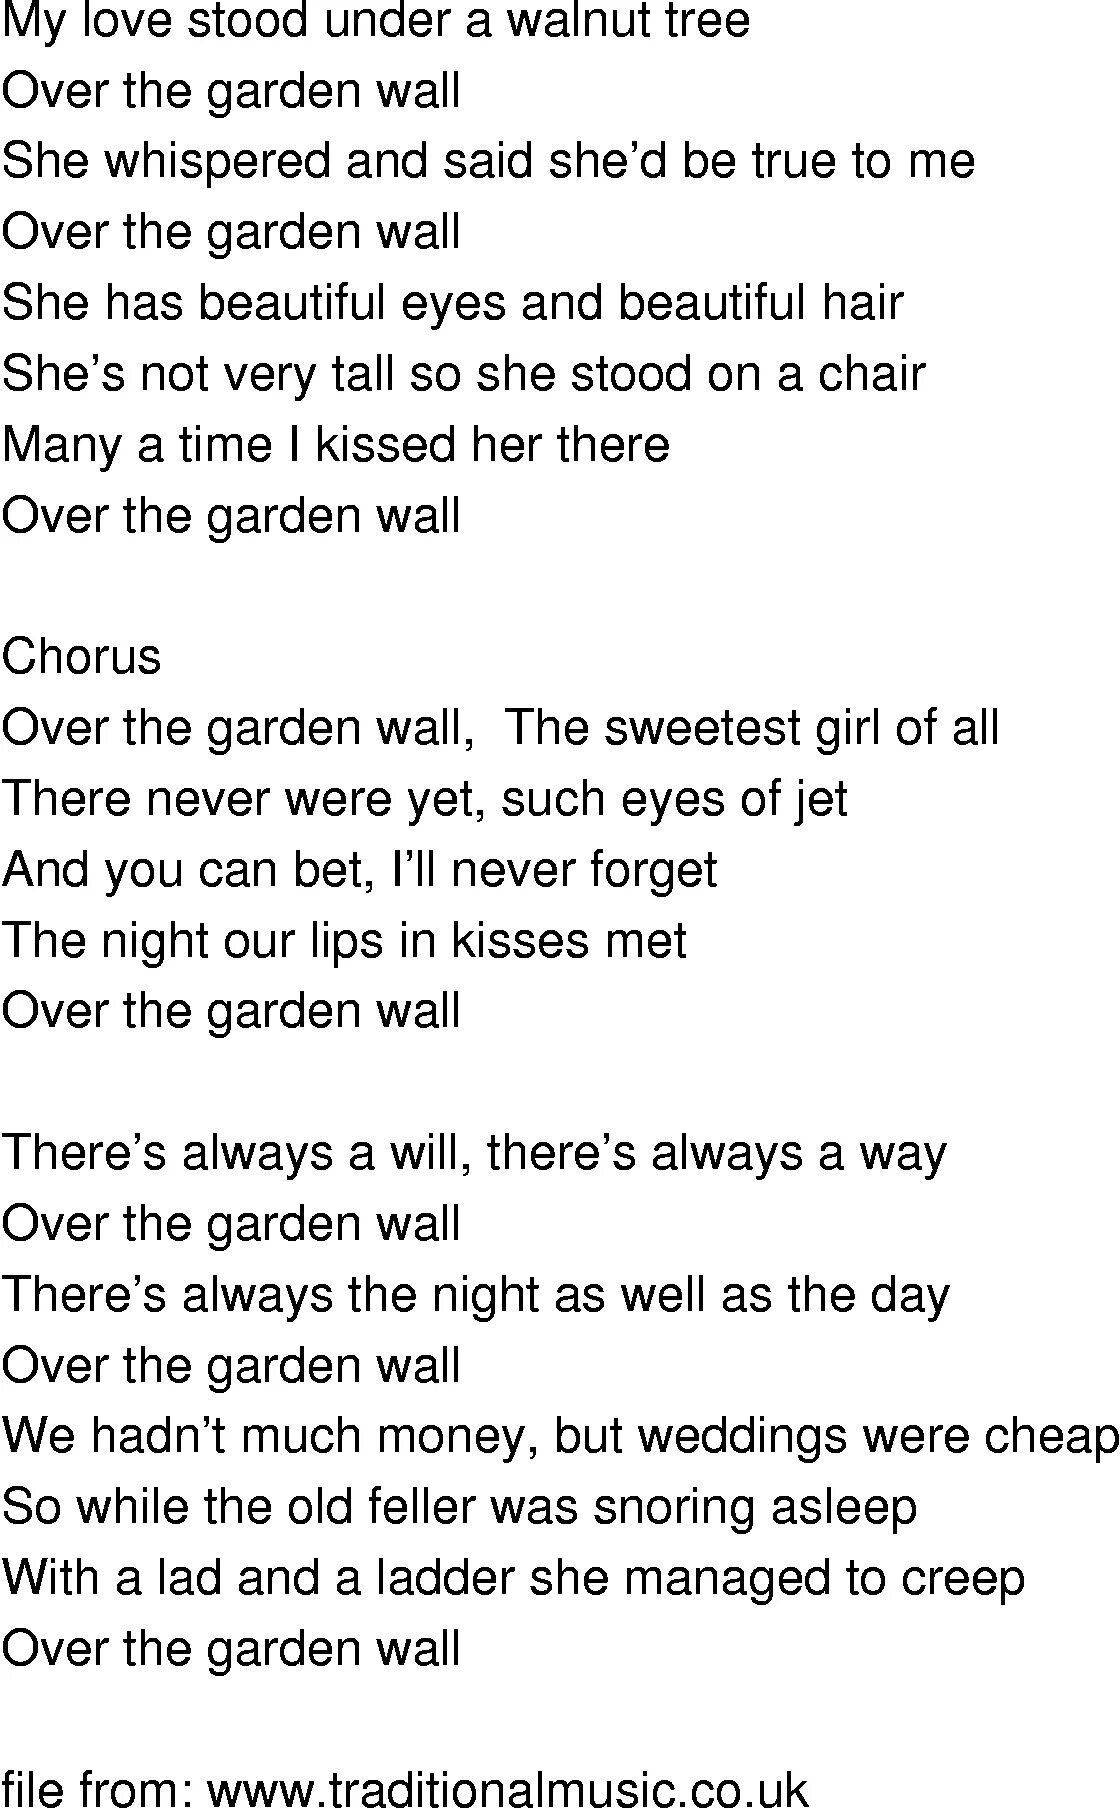 Over the Garden Wall Lyrics. The Garden песни. Песня over the Wall. Over and over песня. Стен перевод песни